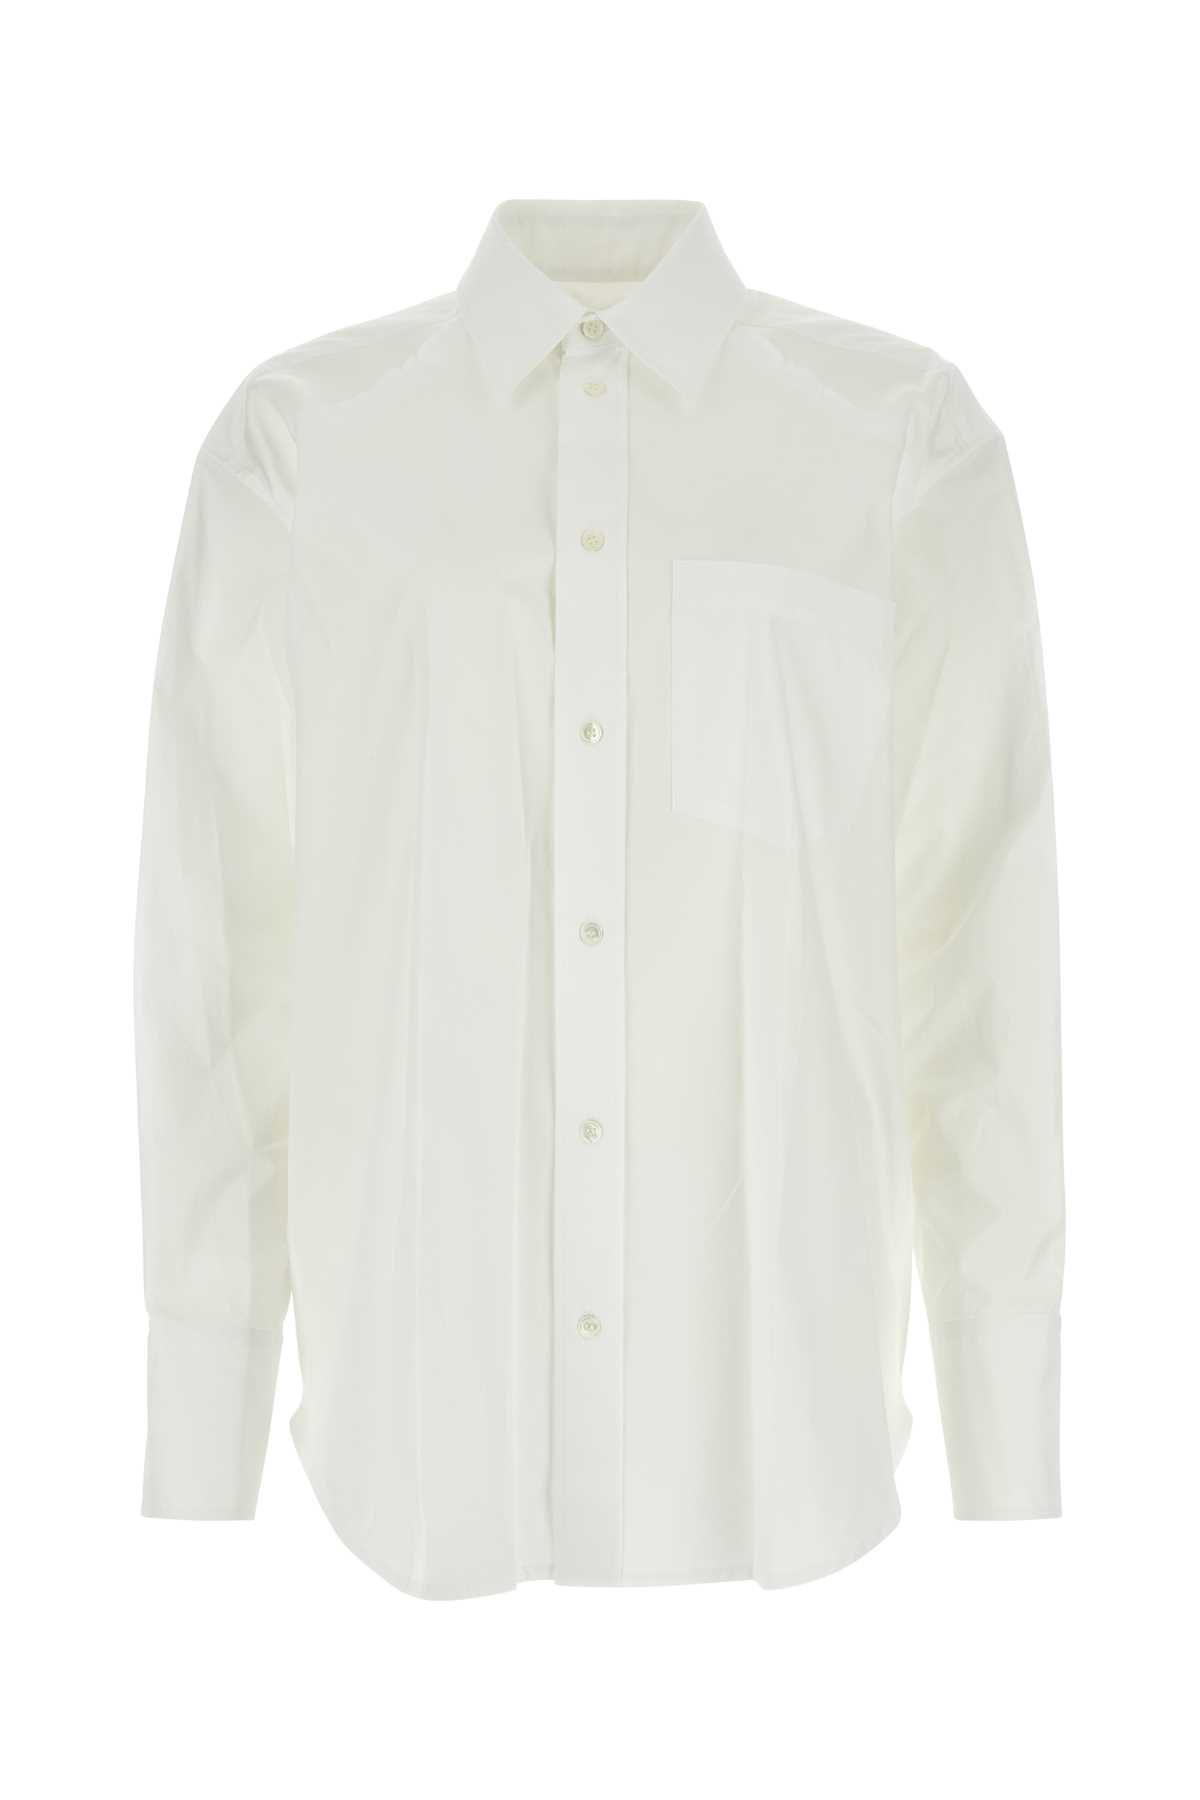 J.W. Anderson White Poplin Shirt